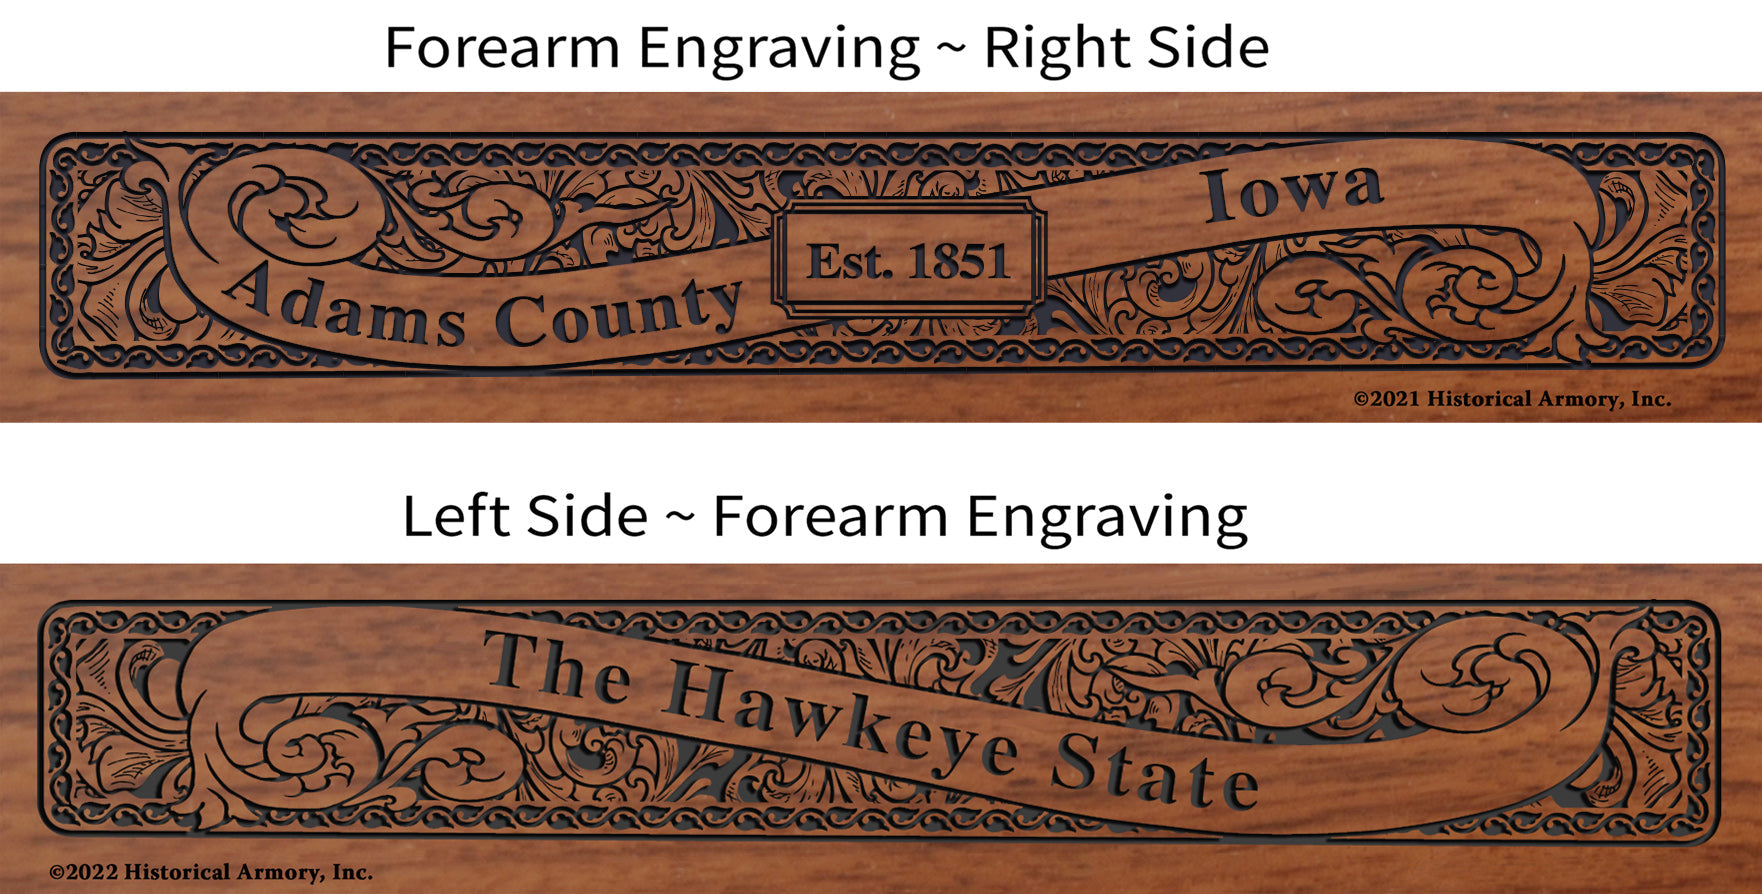 Adams County Iowa Engraved Rifle Forearm